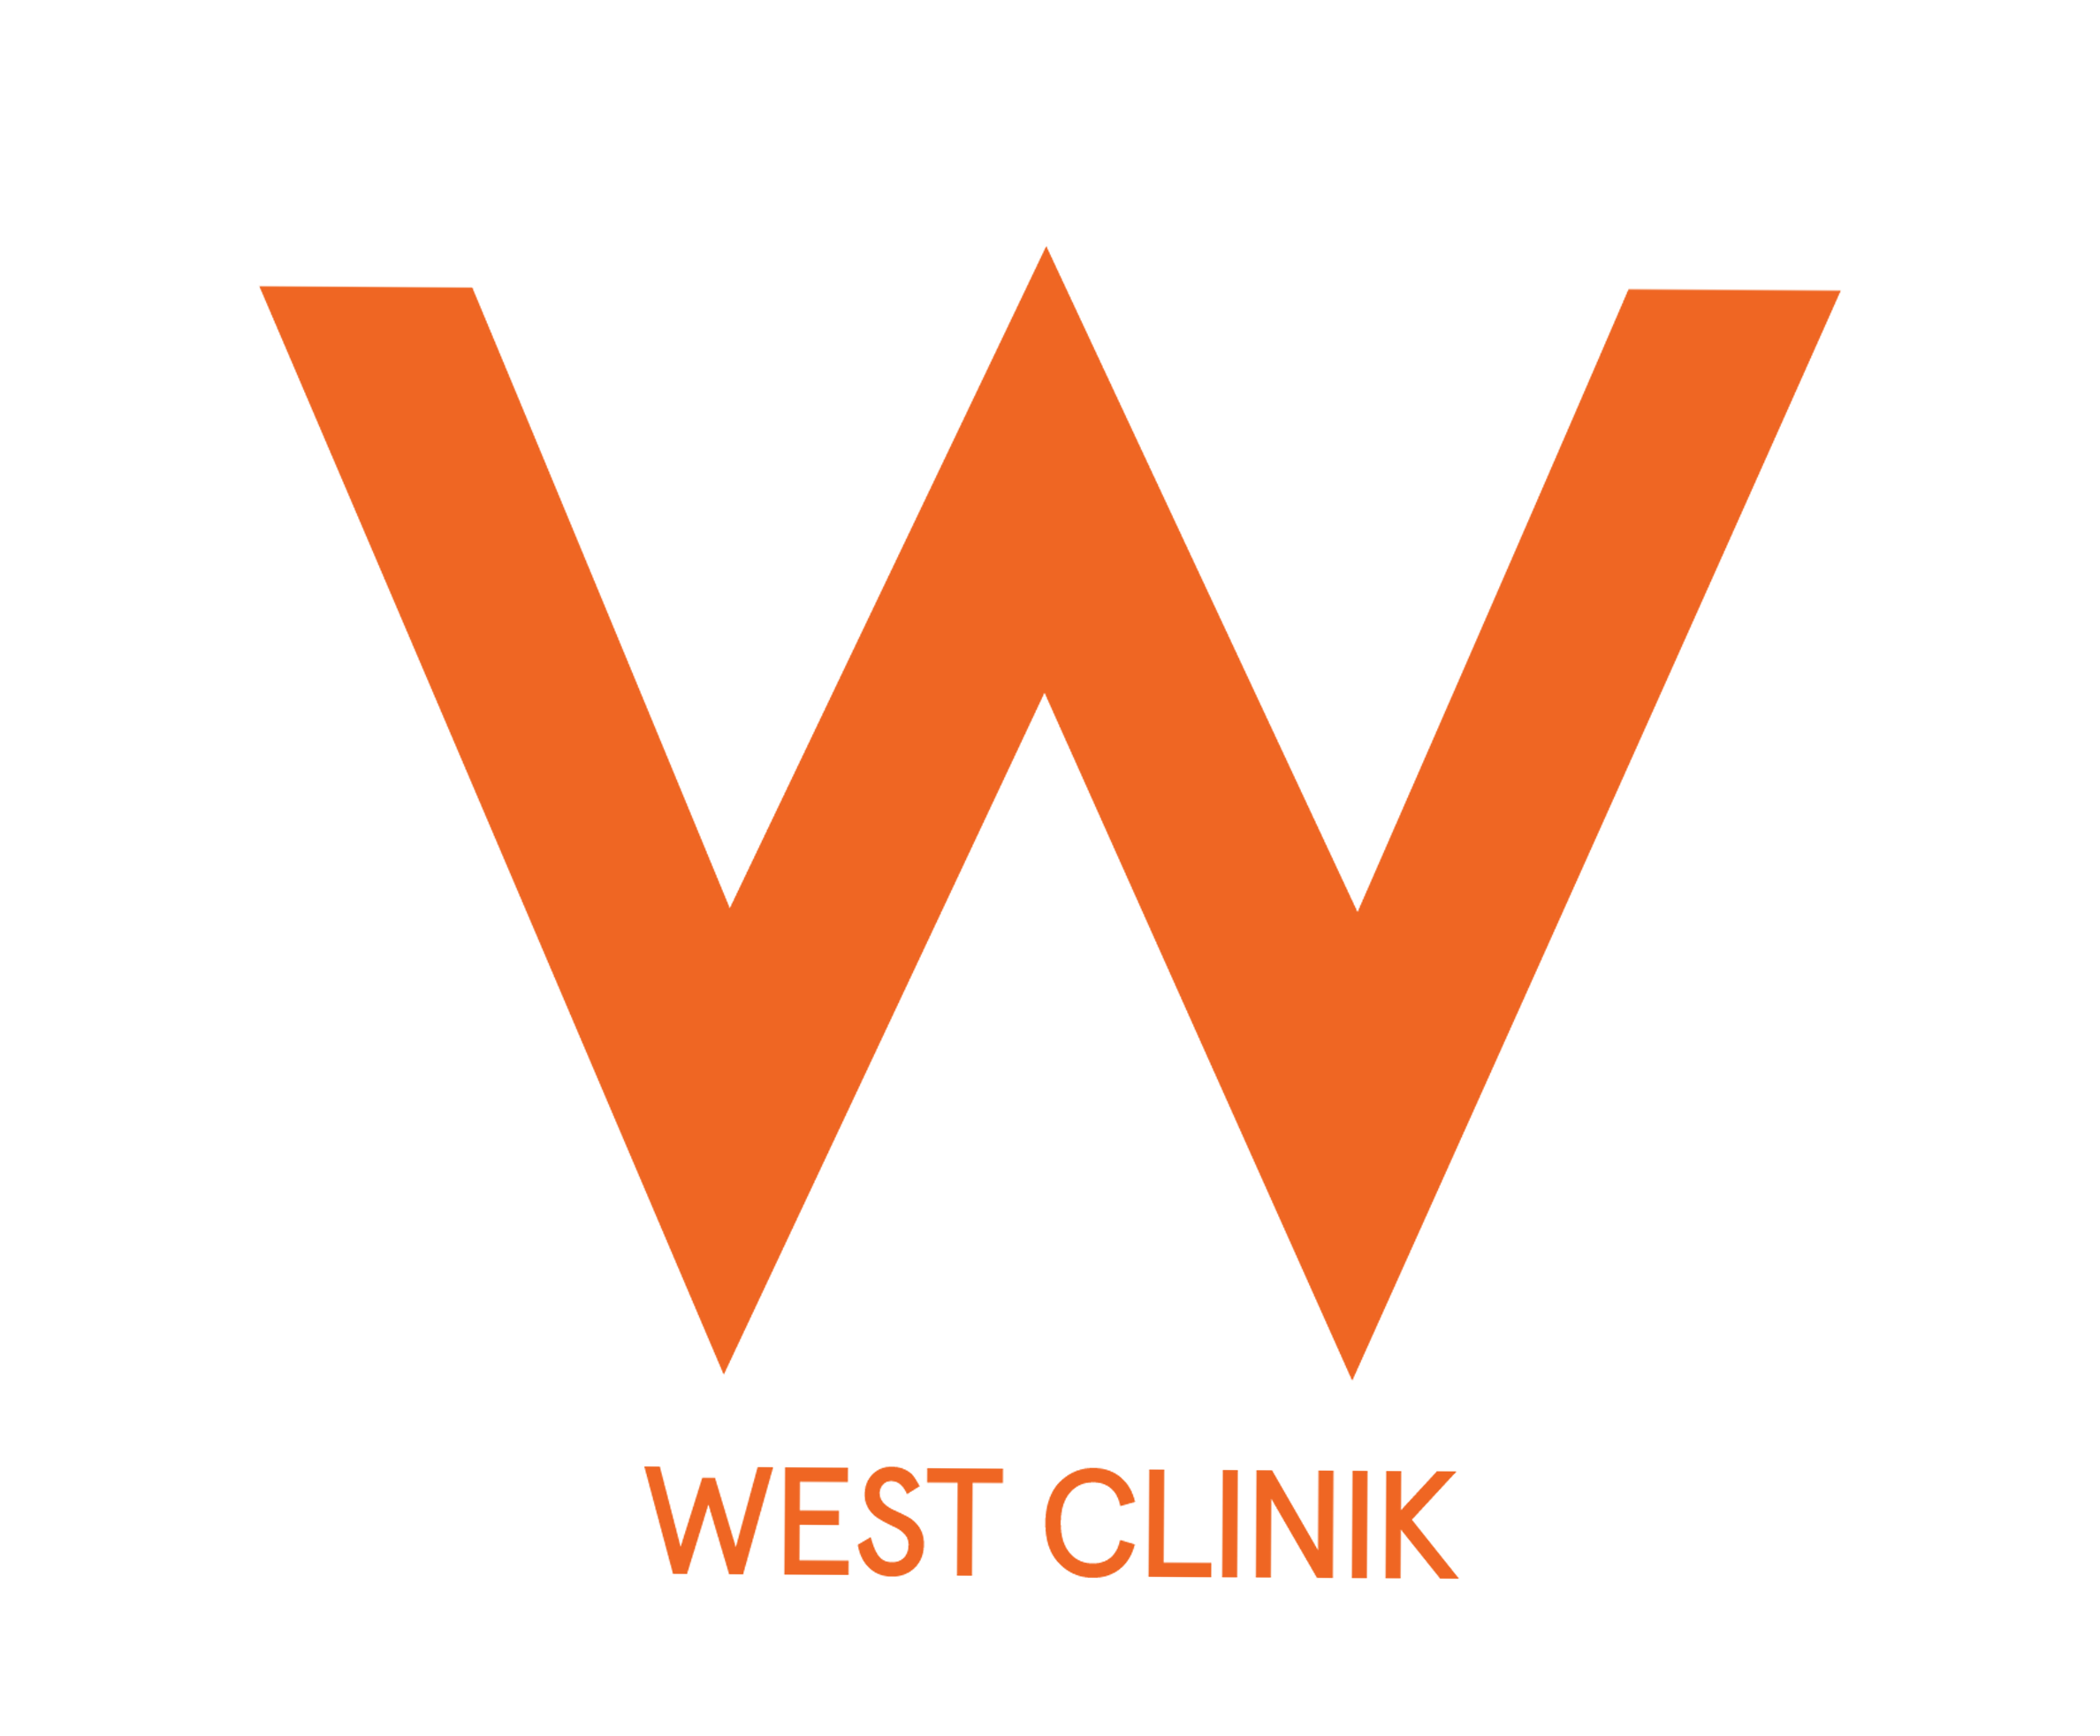 West Clinik-logo